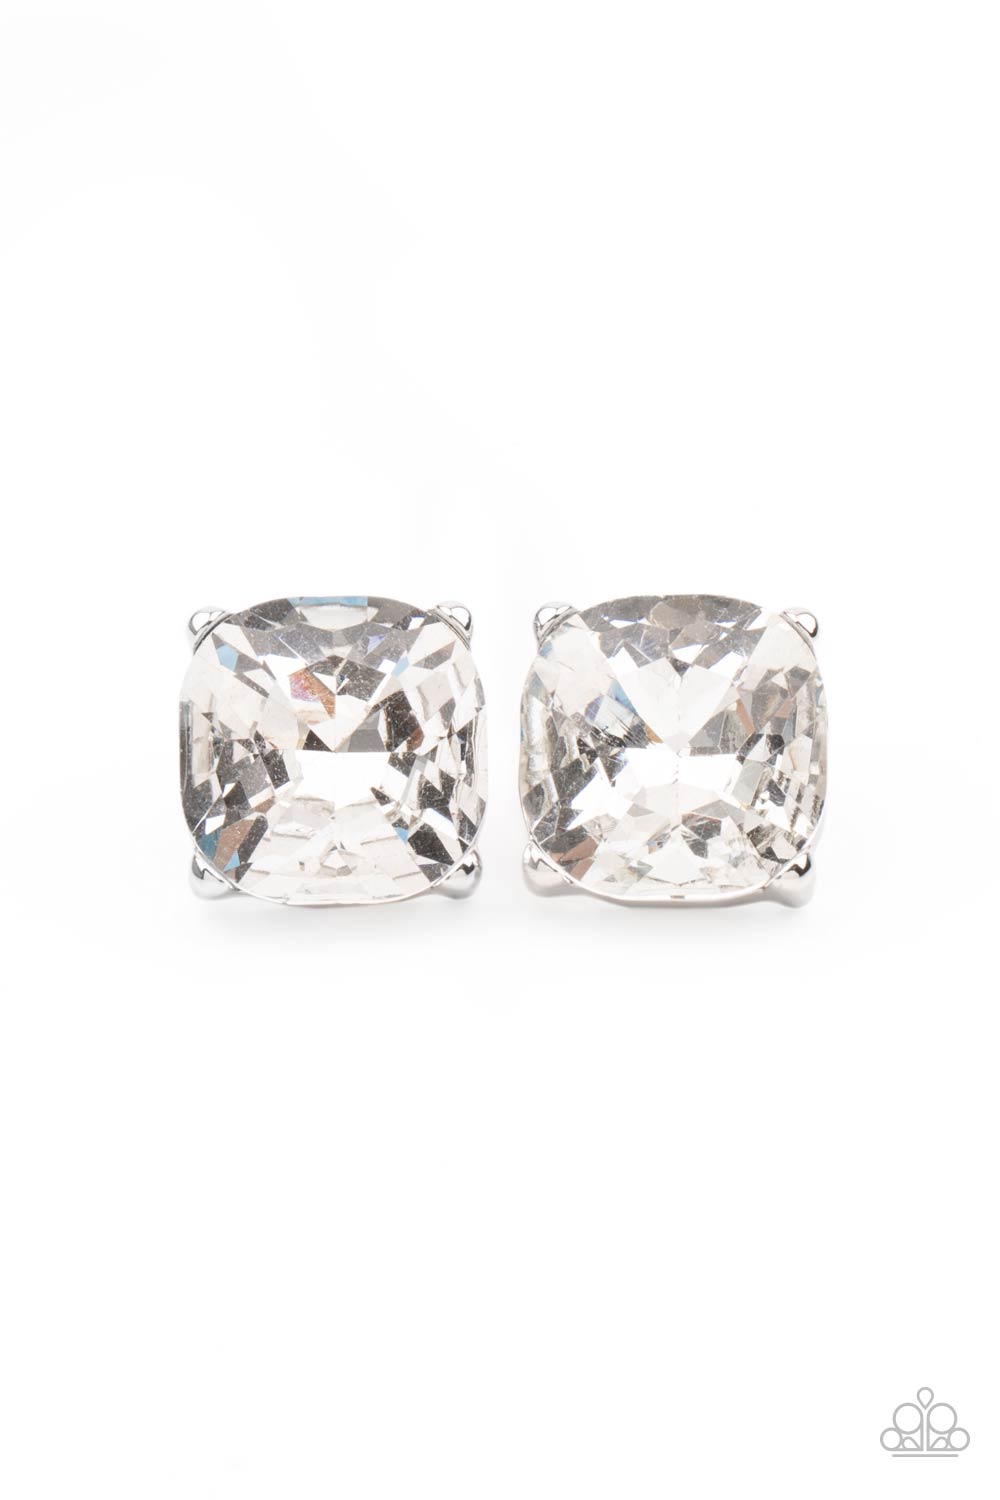 Royalty High - White Rhinestone Earrings - Paparazzi Accessories